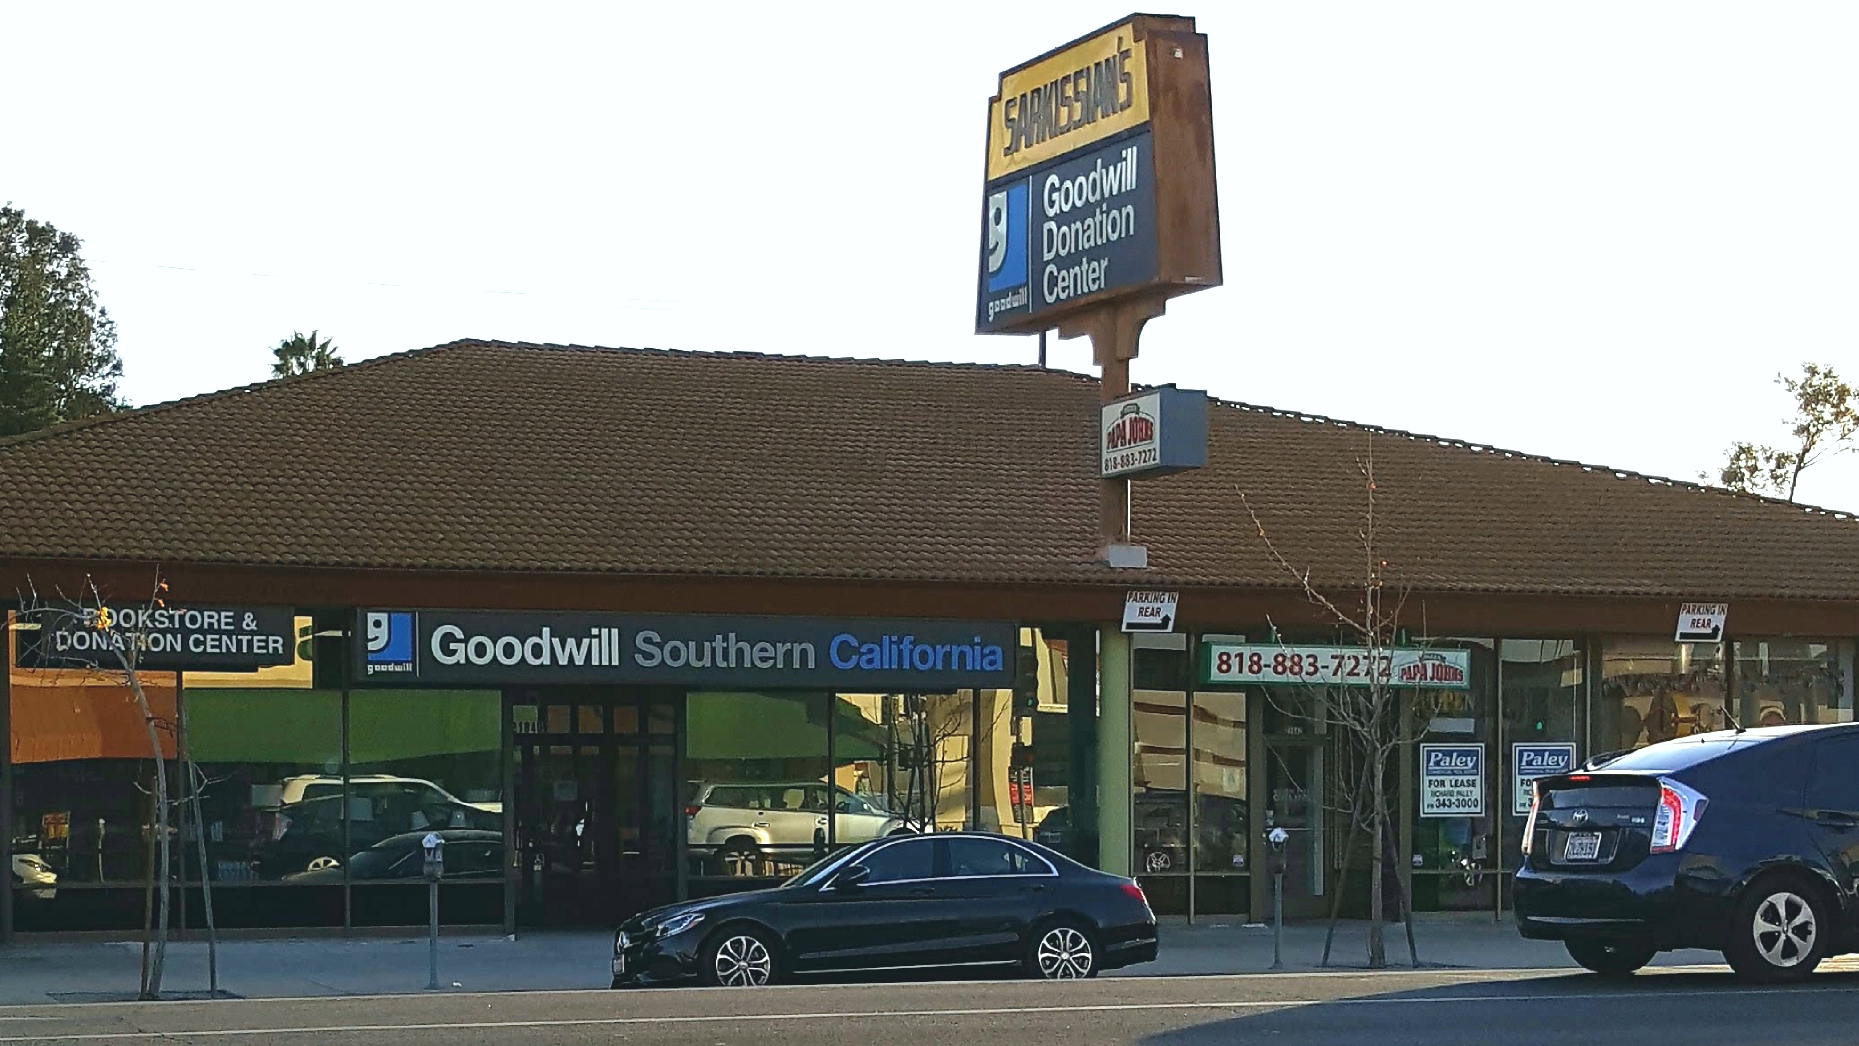 Goodwill Southern California Boutique / Donation Center